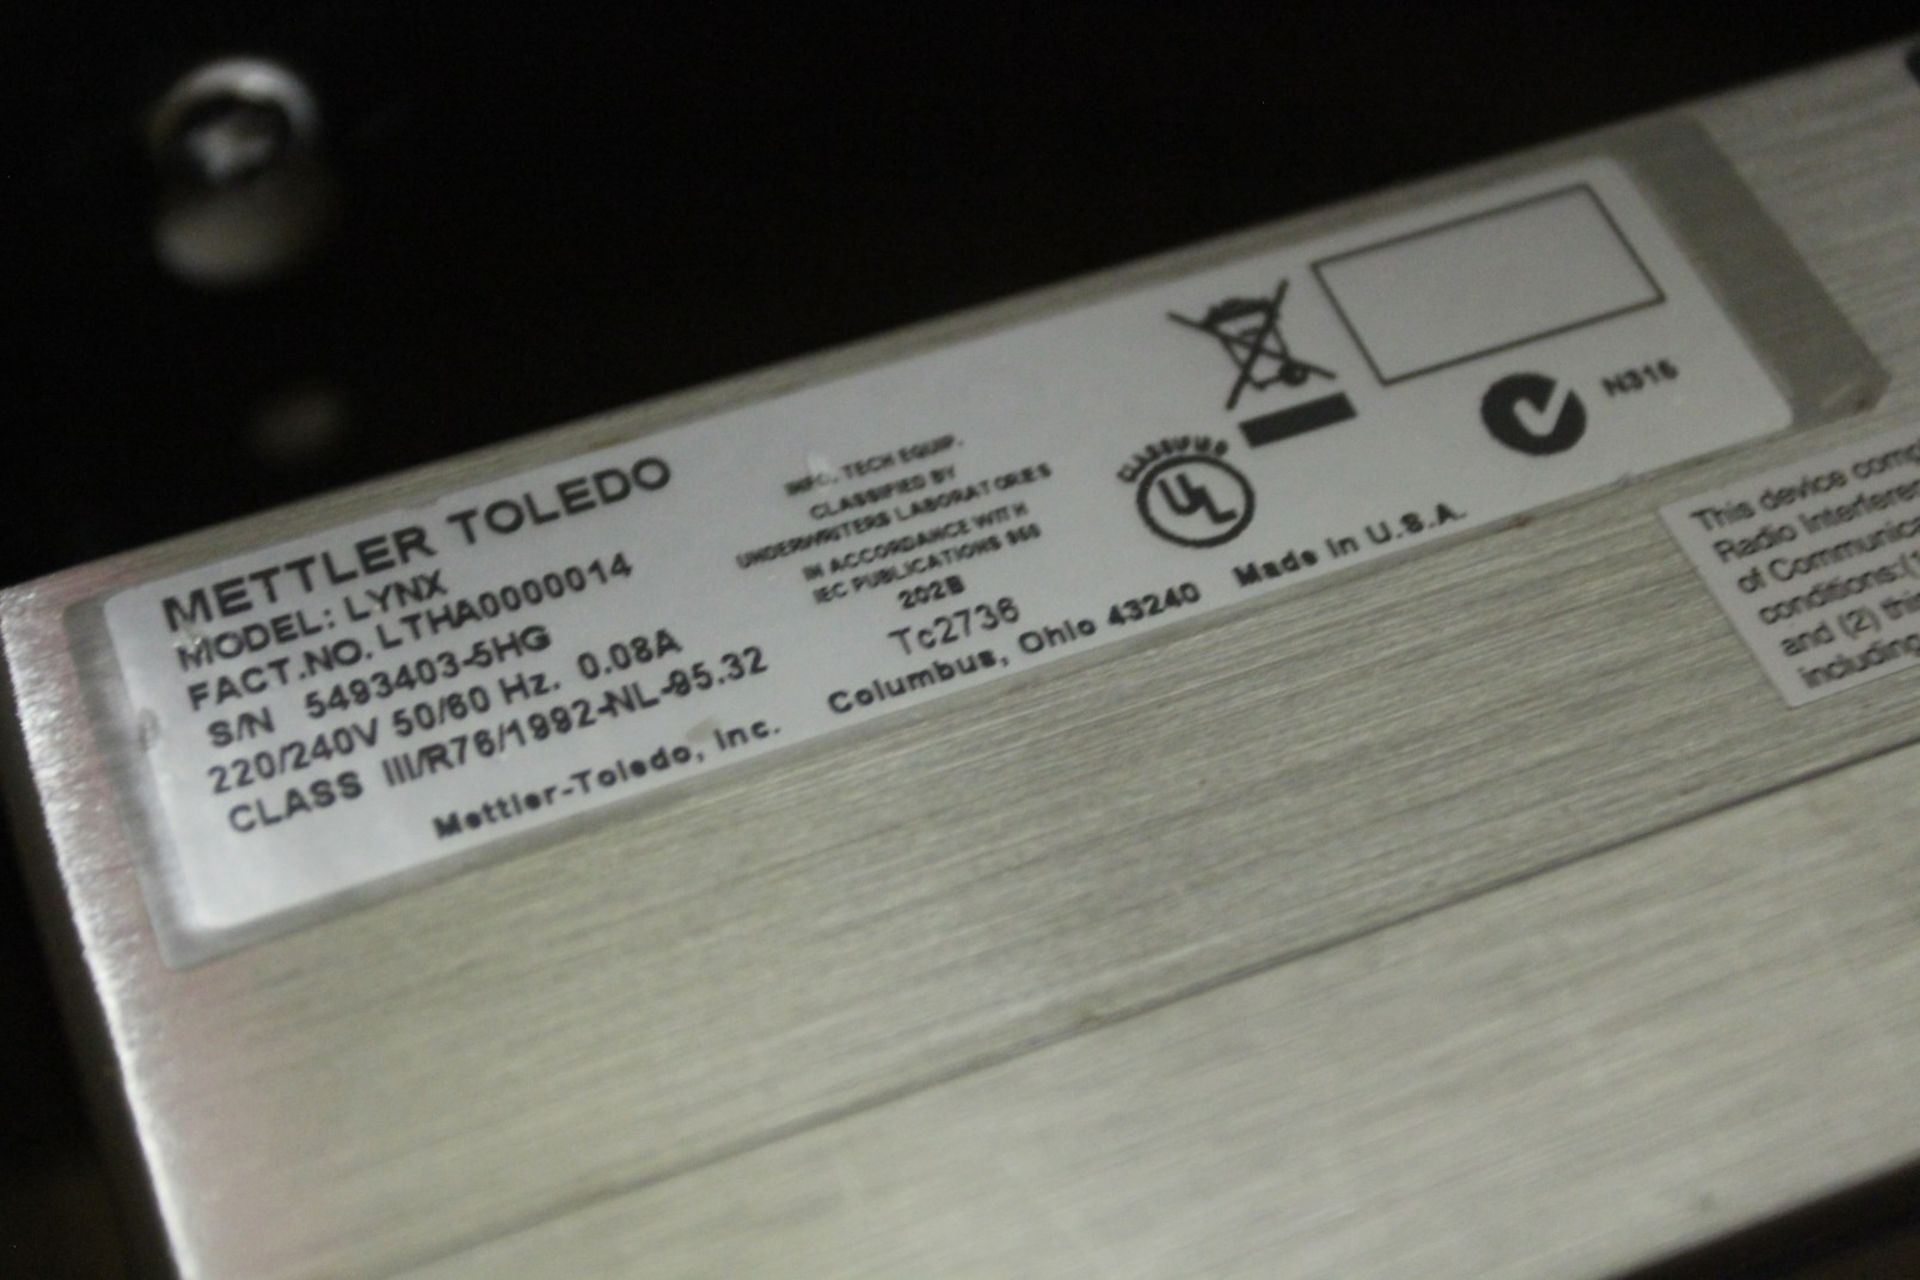 800 kg Stainless Steel Floor Scale w/ Mettler Toledo Lynx Digital Readout, s/n 5493403-5HG - Bild 4 aus 5